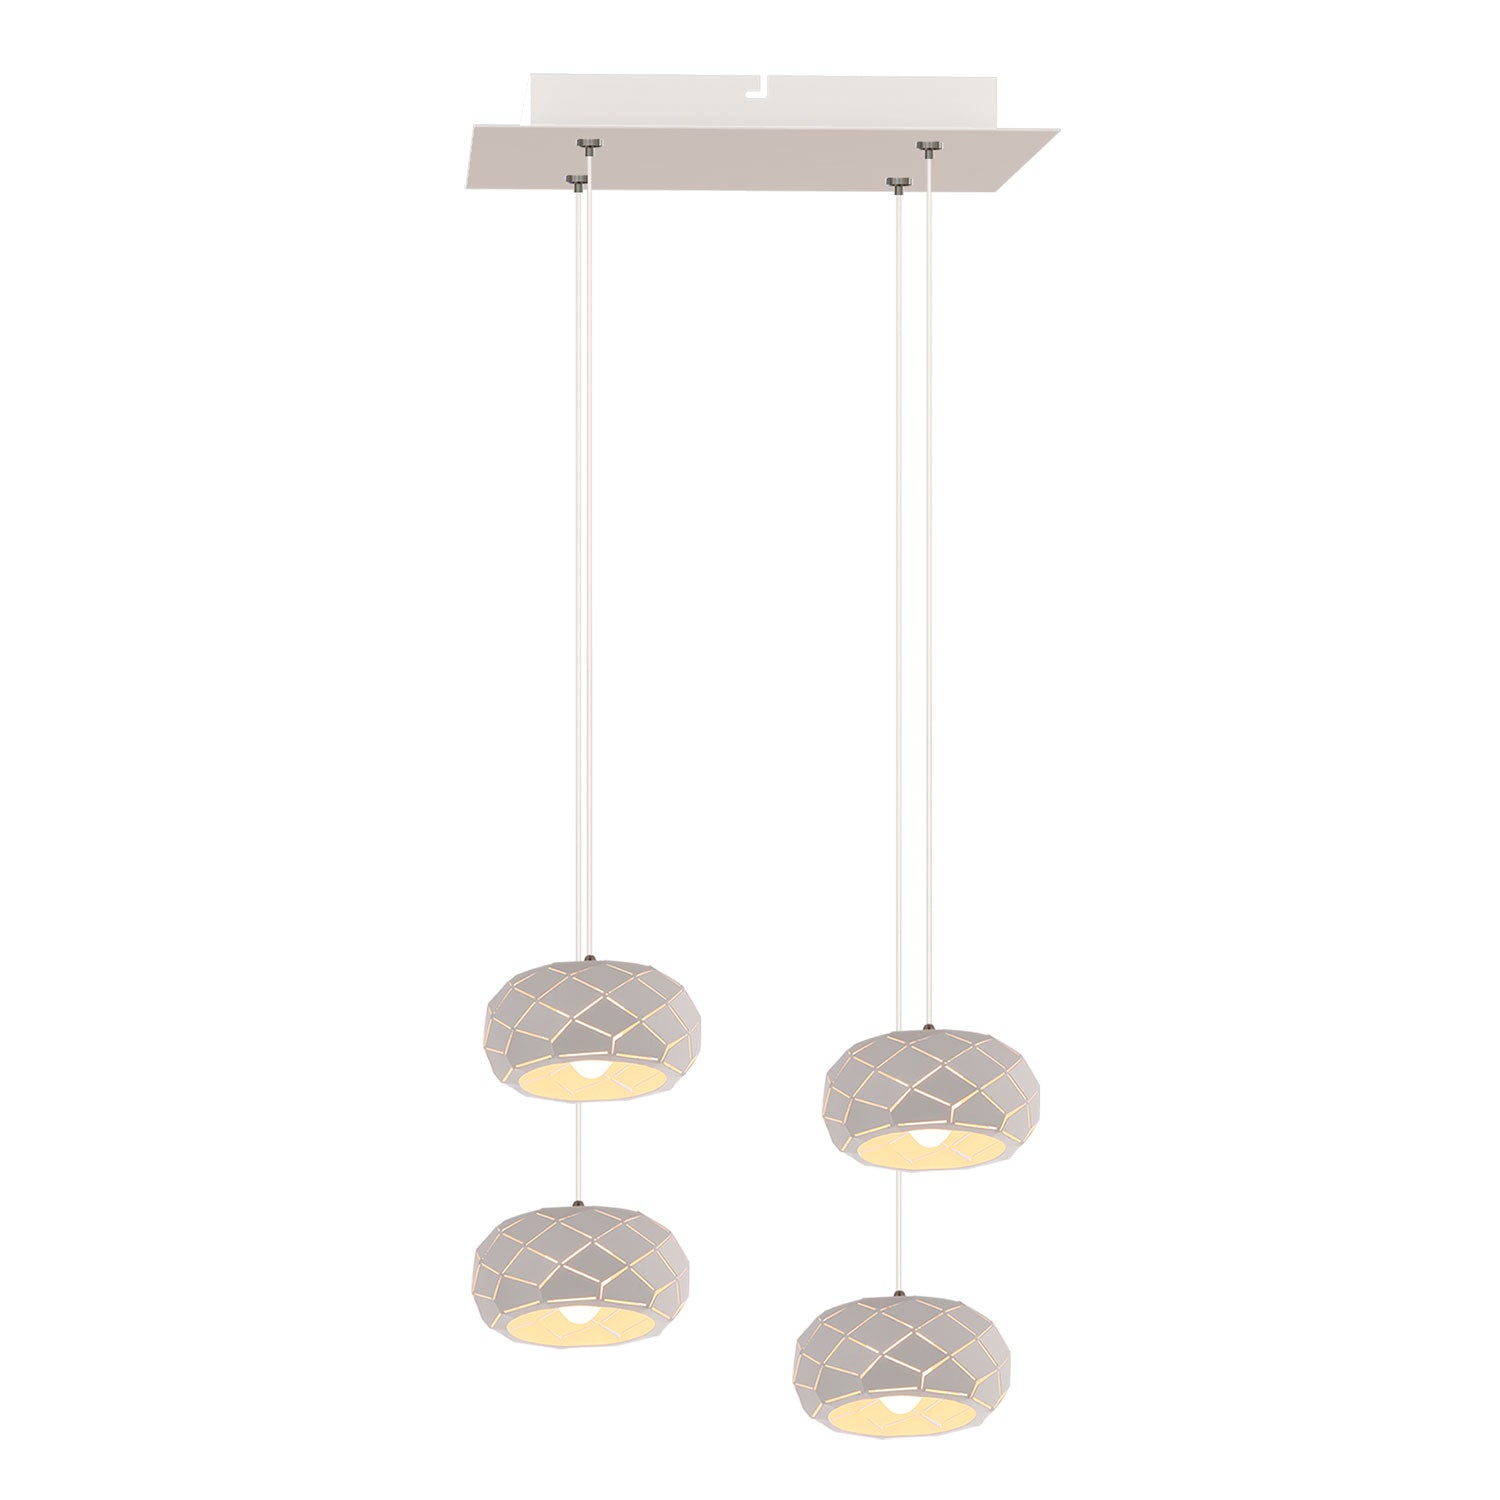 Unique LED modular pendants system. The only 100% modular LED lighting concept, wide selection of canopies, modular lighting, unique lighting fixtures for interior design, kitchen island, living room lighting.